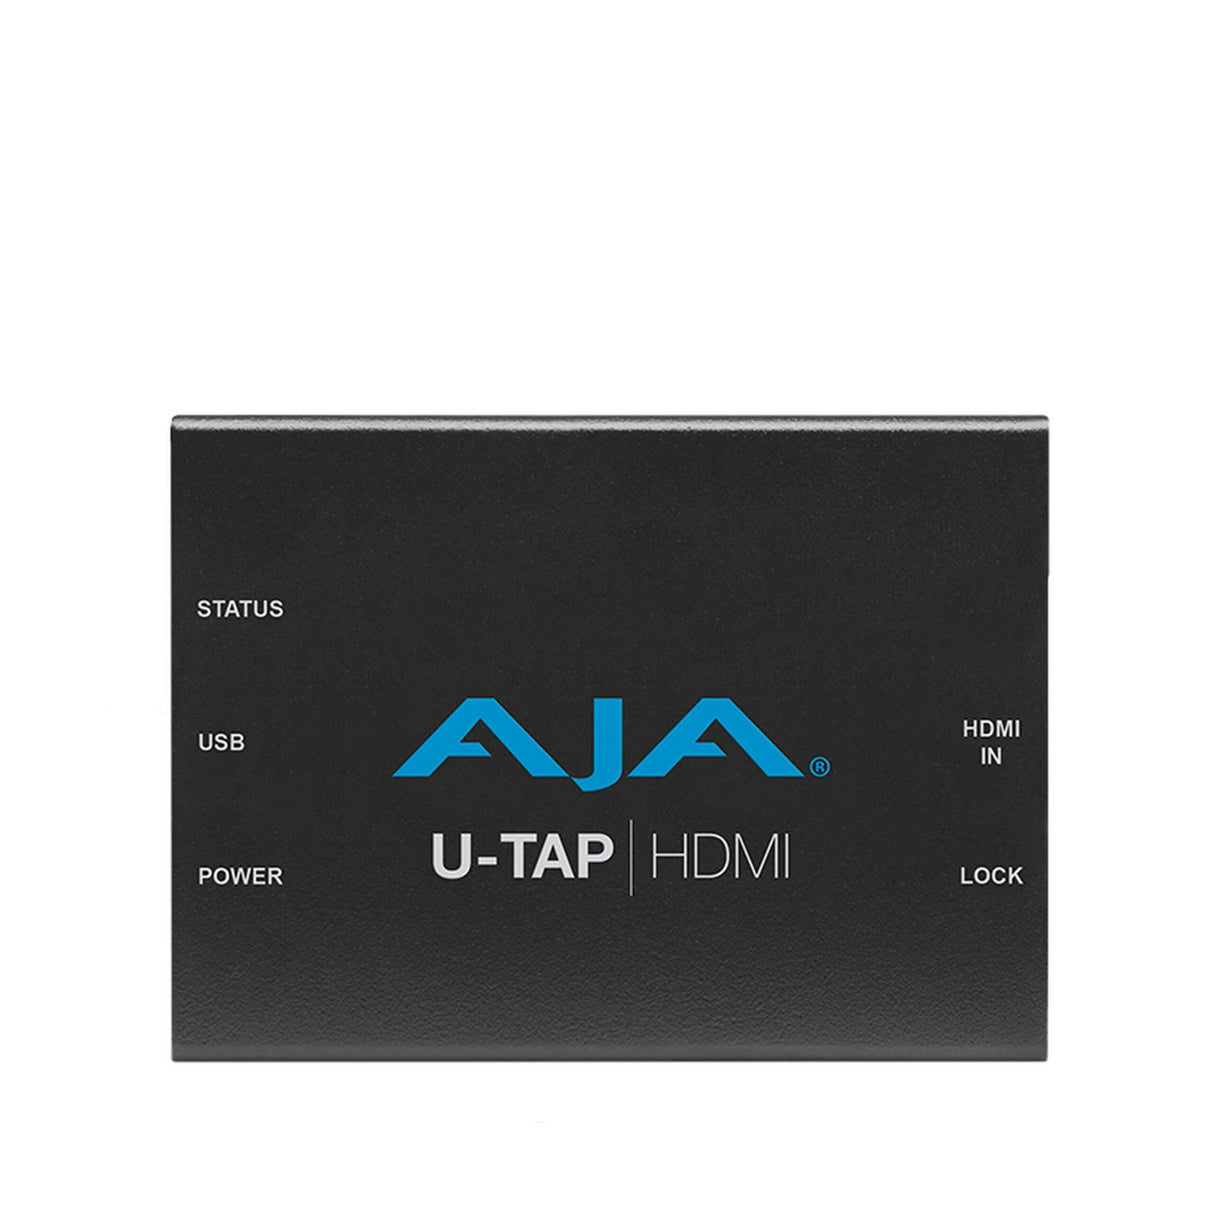 AJA U-TAP-HDMI HD/SD USB 3.0 Capture Device for Mac/Windows/Linux with